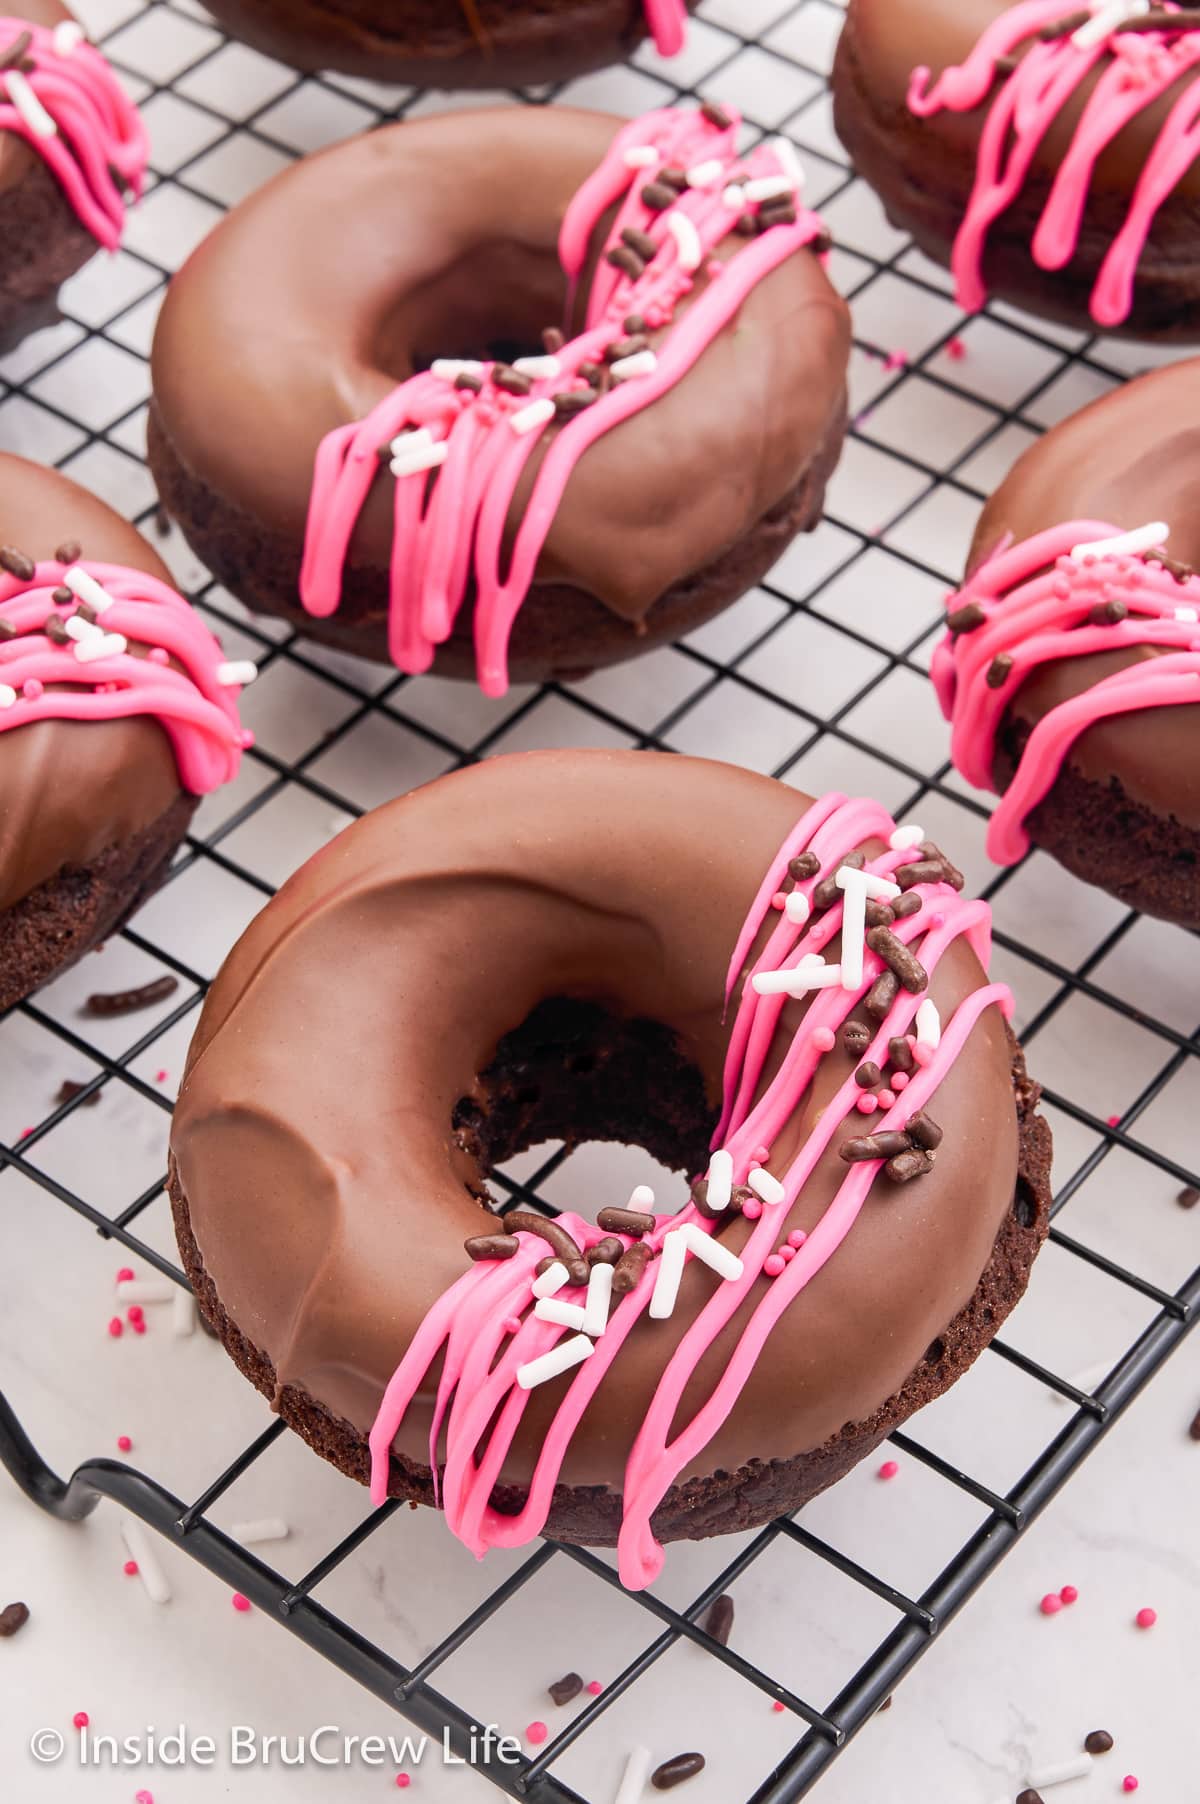 Glazed chocolate donuts on a wire rack.